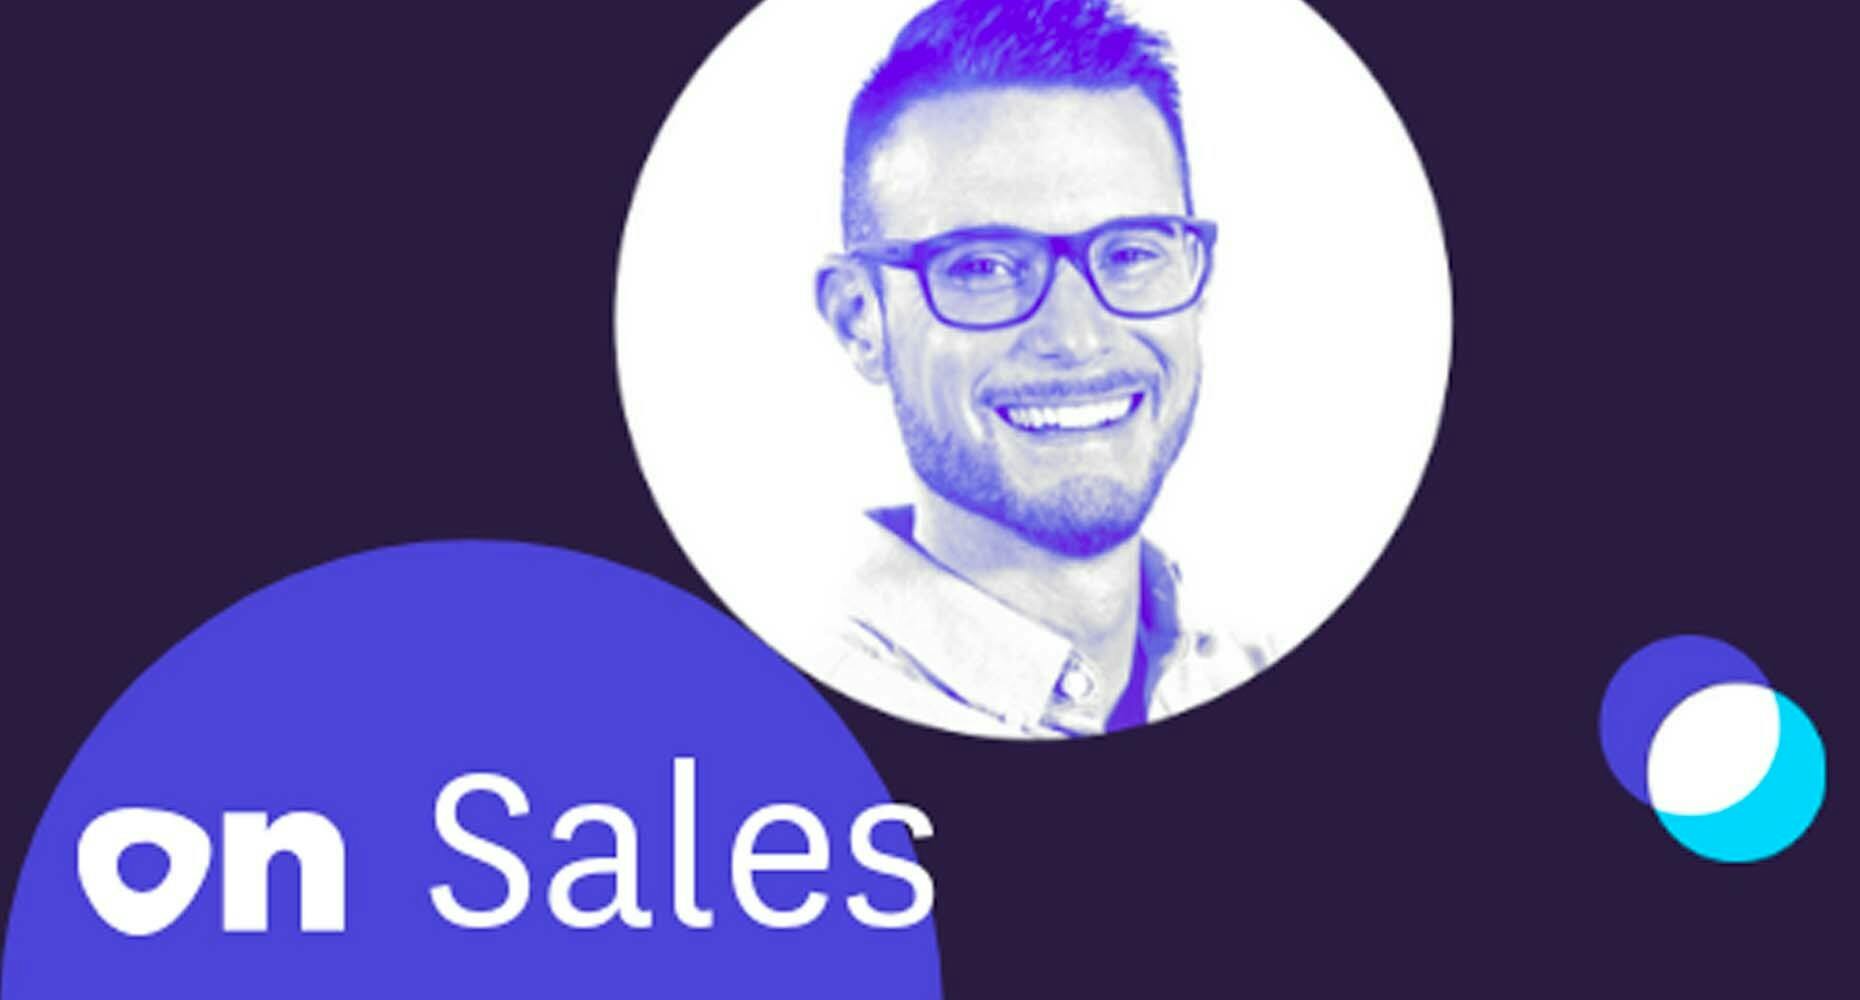 Kosoglow on sales graphic